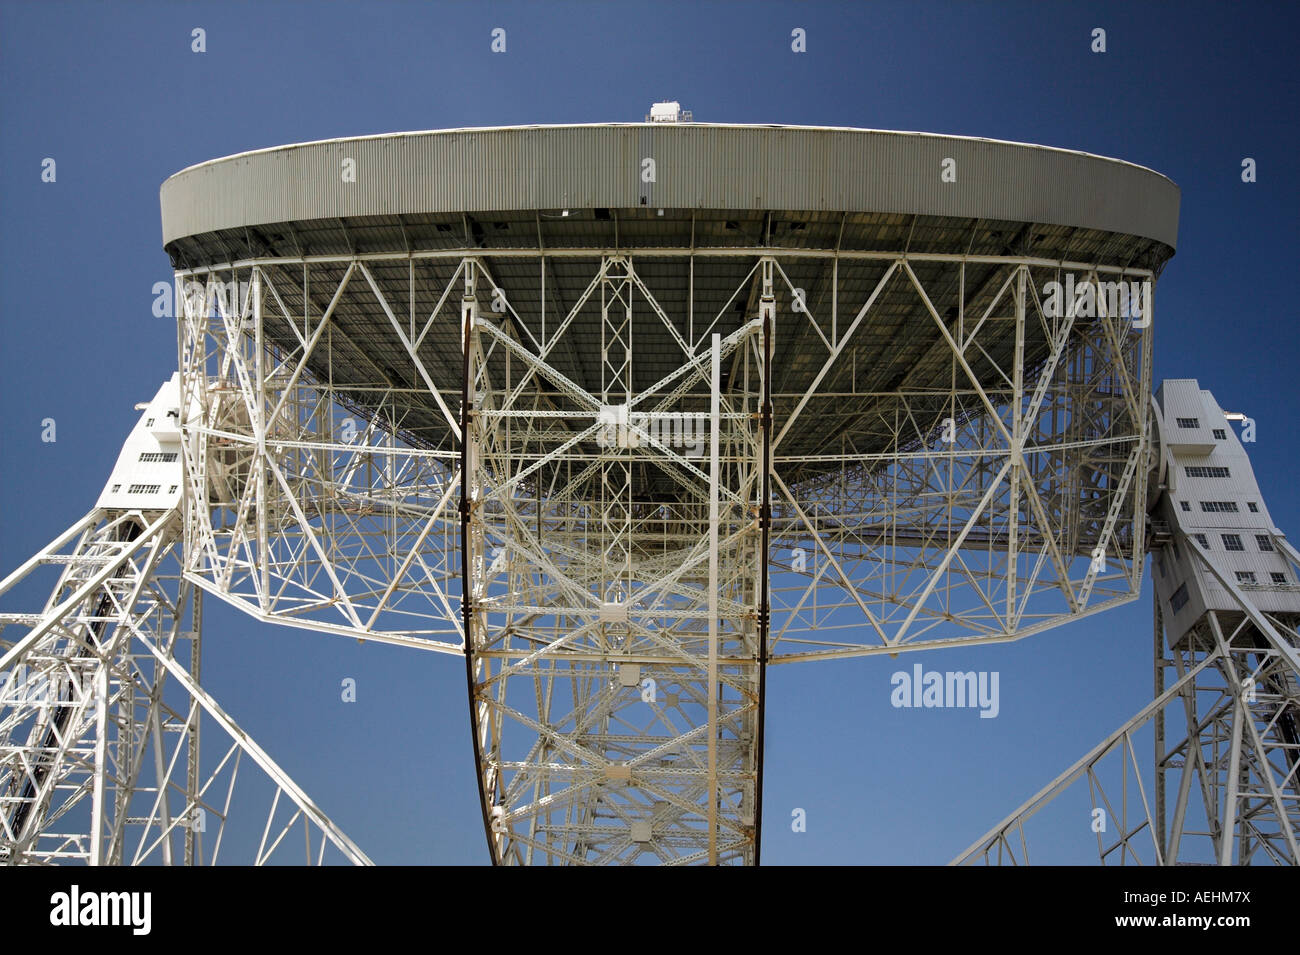 Lovell Telescope, Jodrell Bank Observatory, Cheshire, UK Stock Photo